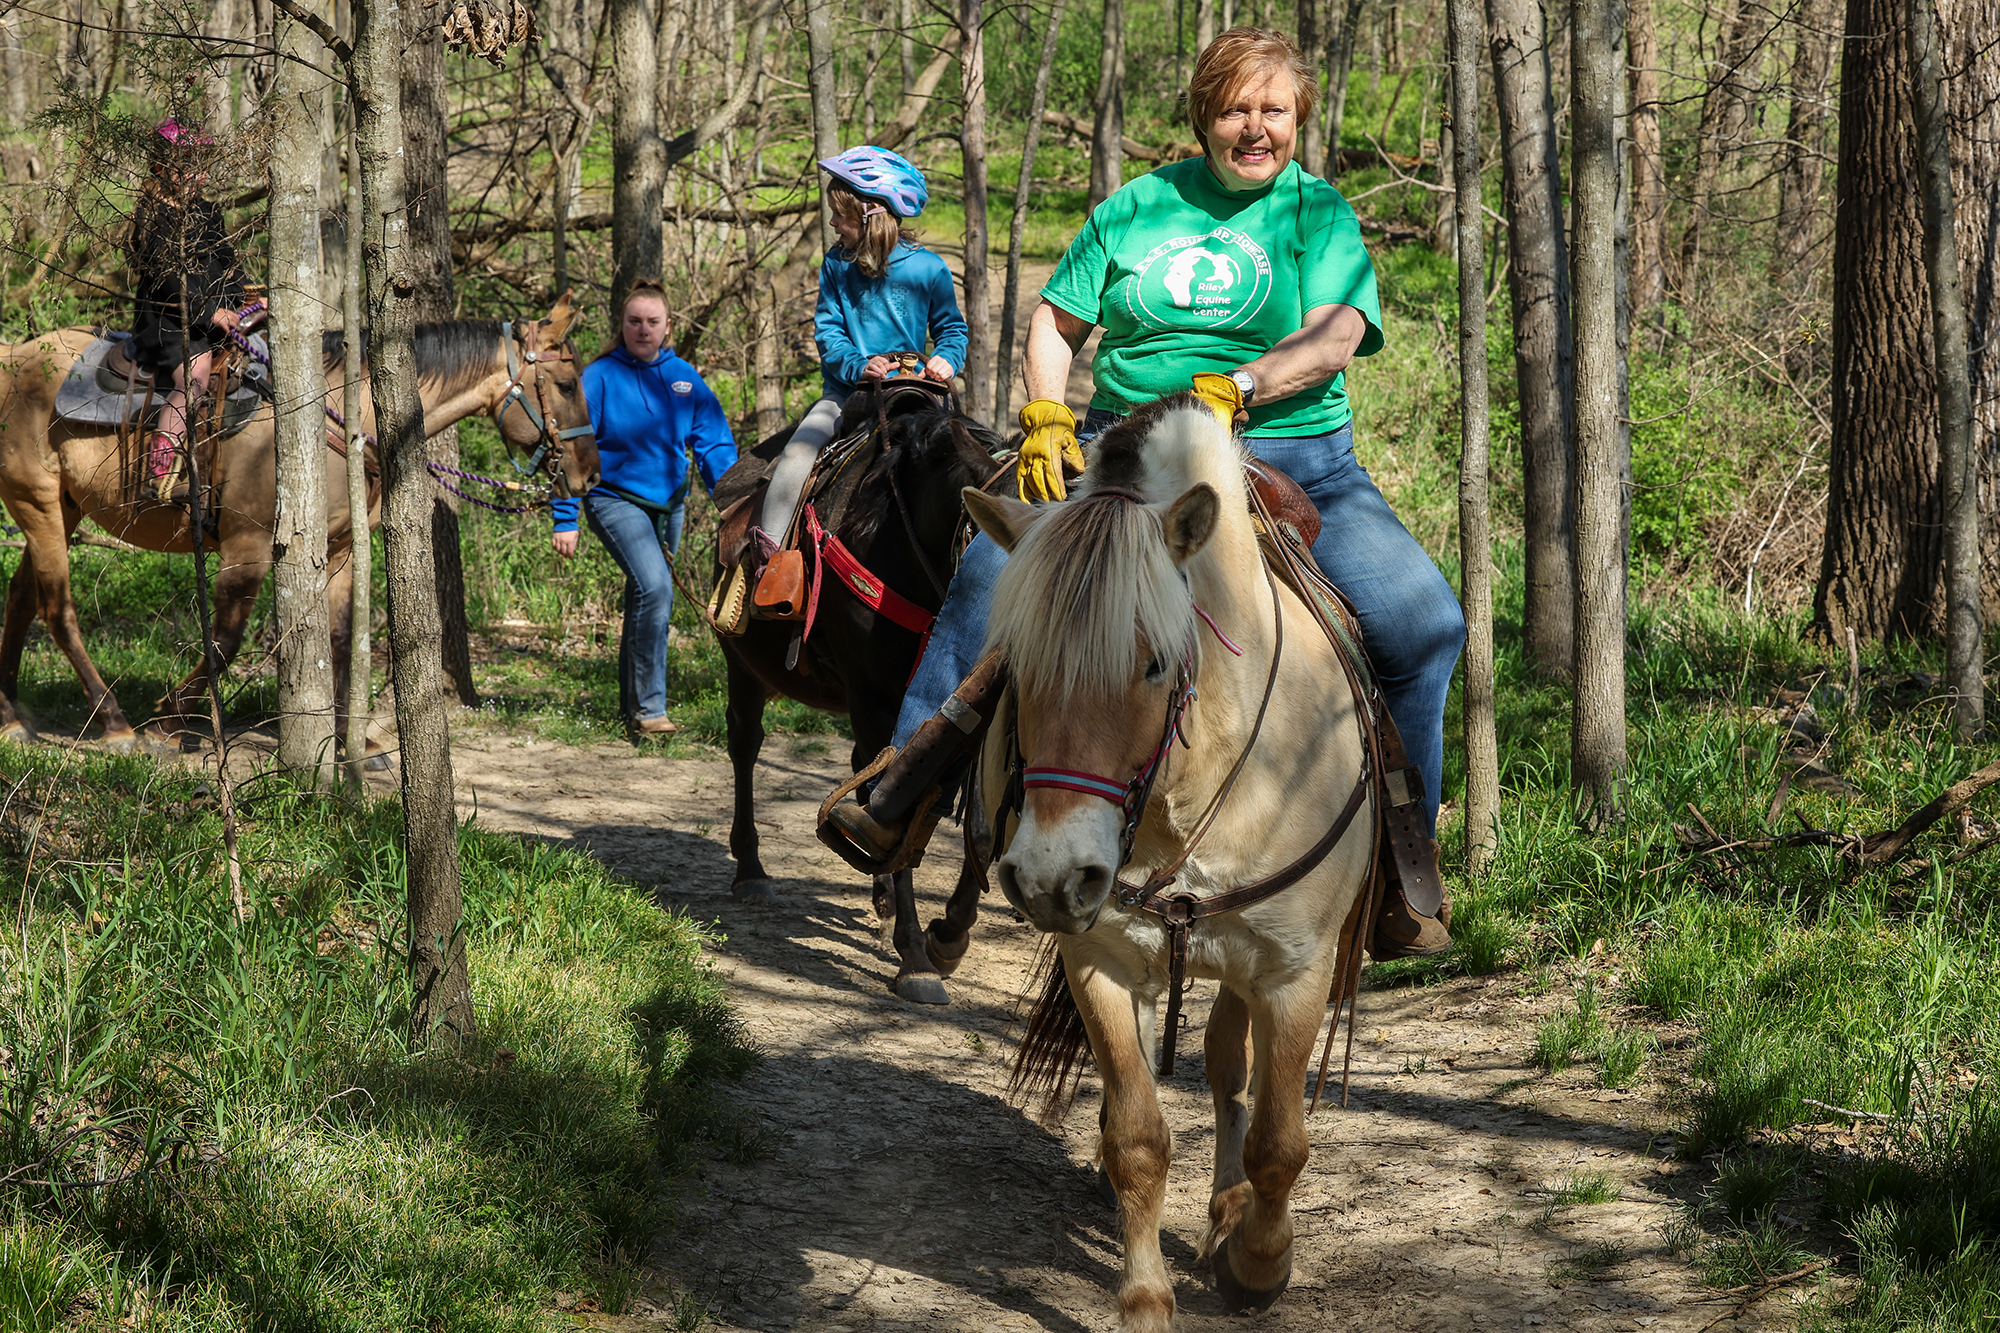 Group on horseback rides on trail